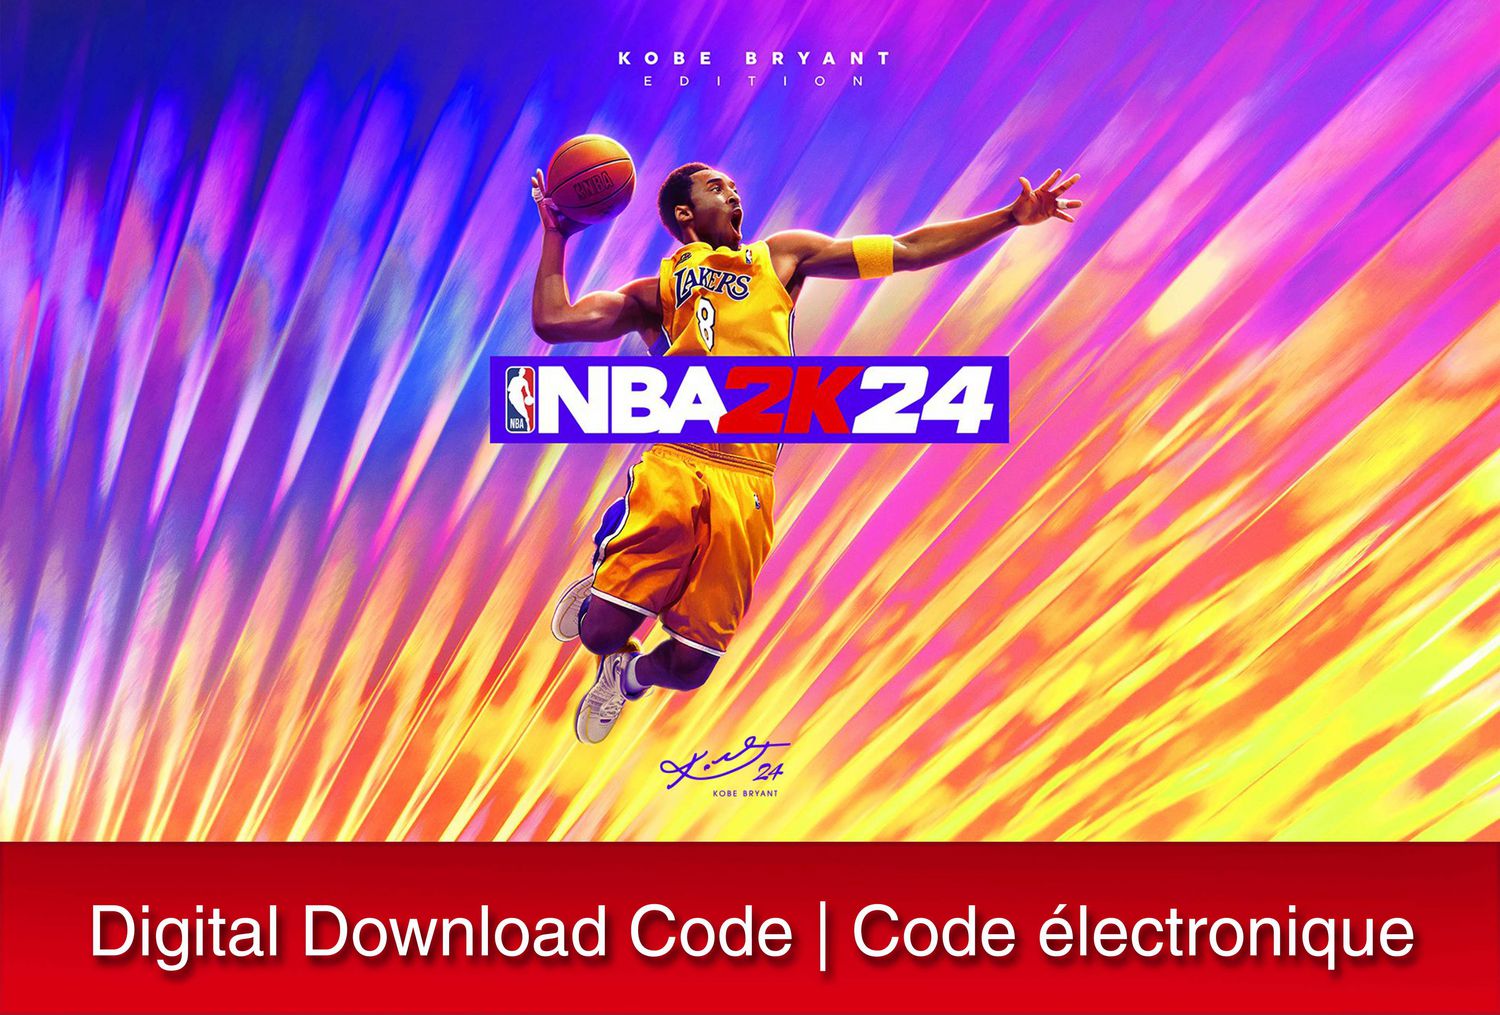 NBA 2K24 Kobe Bryant Edition for Nintendo Switch - Nintendo Switch 